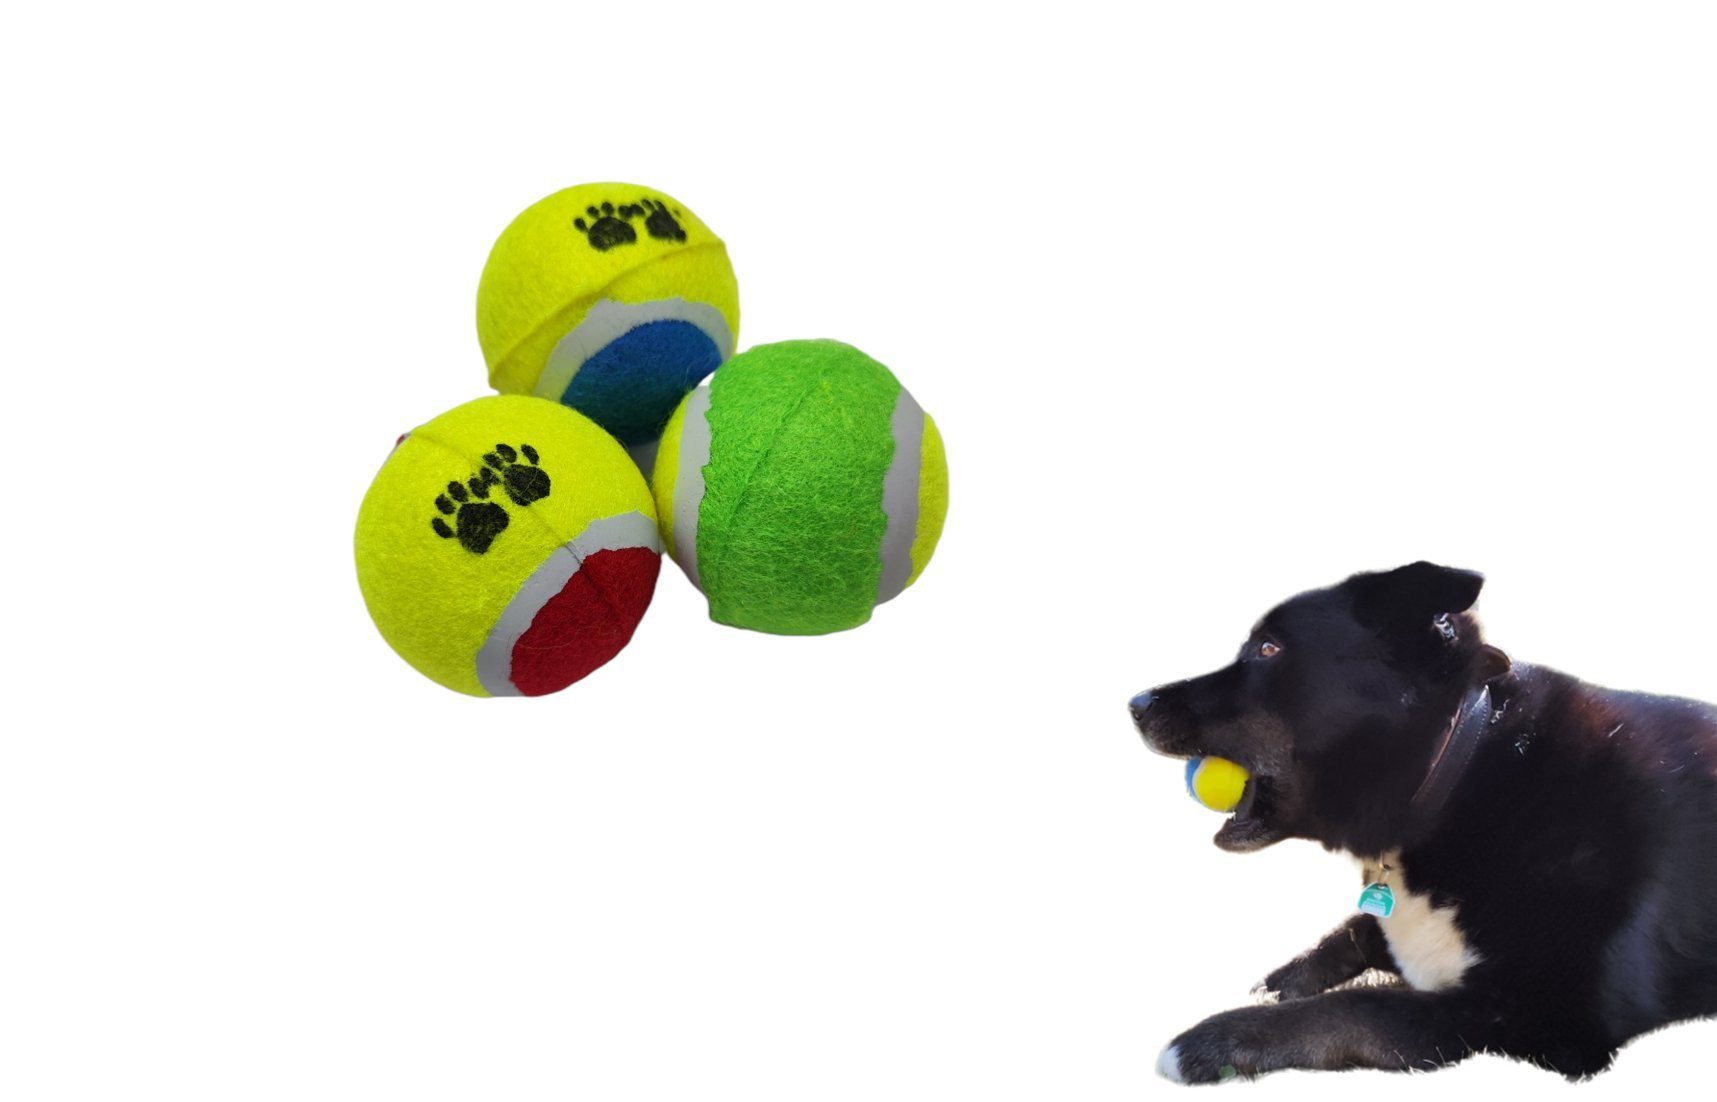 HMH-Shop Tierball Hundebälle bunt Hundespielzeug Haustier Katze Ball Spielen Hund Tennisball Dog Toys Hundeball Spaß Agility Training Ausdauer auspowern Tennisbälle Ø ~6,5cm Helle Farben gut auffindbar, Helle Farben, gut auffindbar 24 Bälle